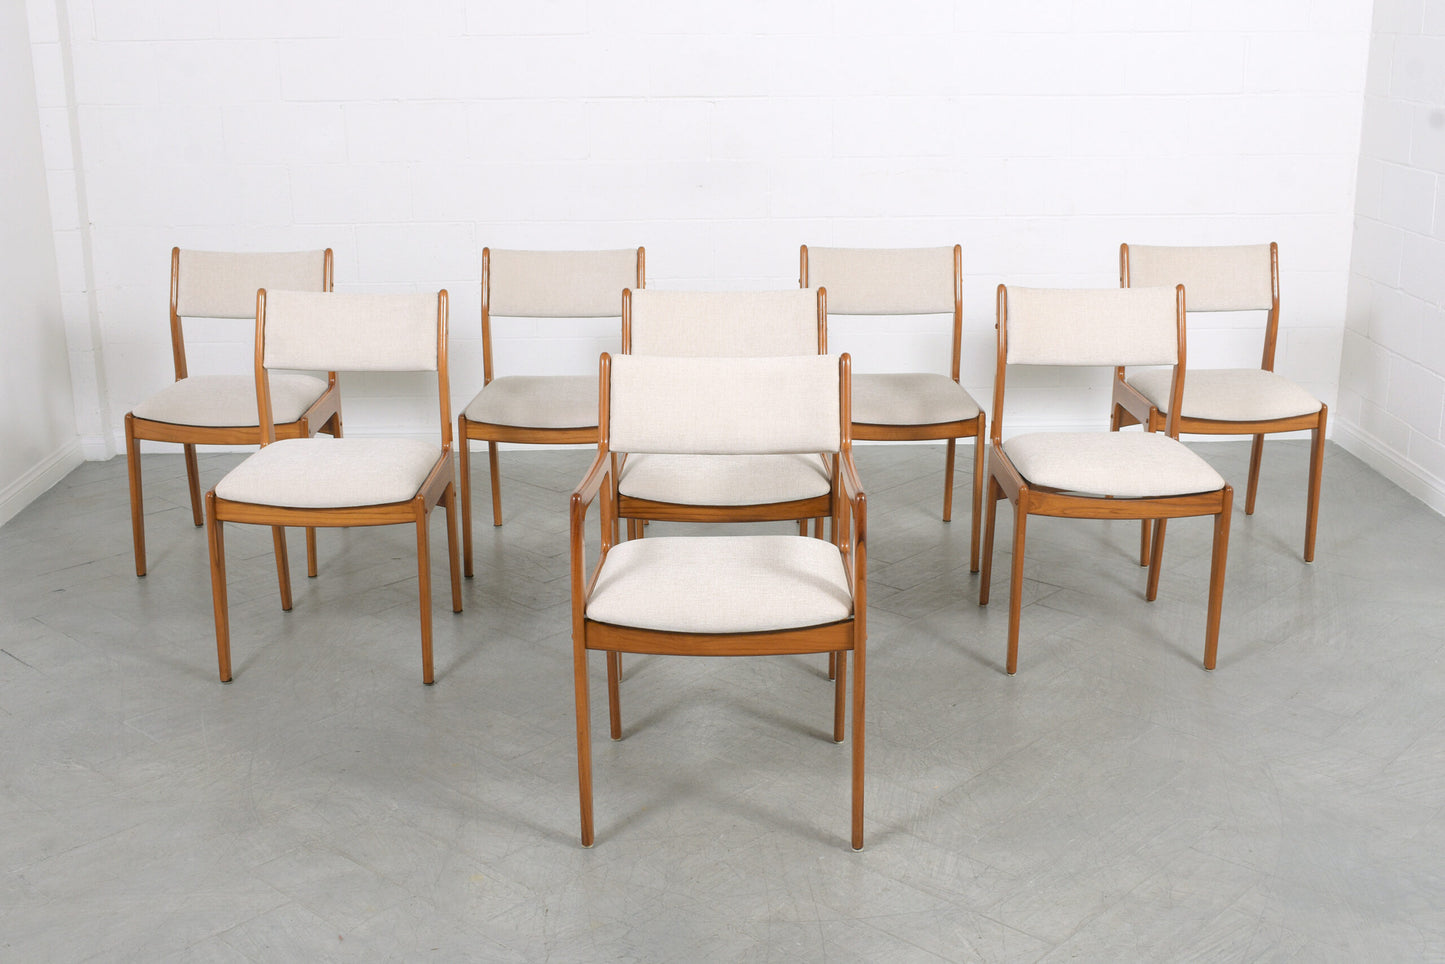 Danish Modern Dining Chairs